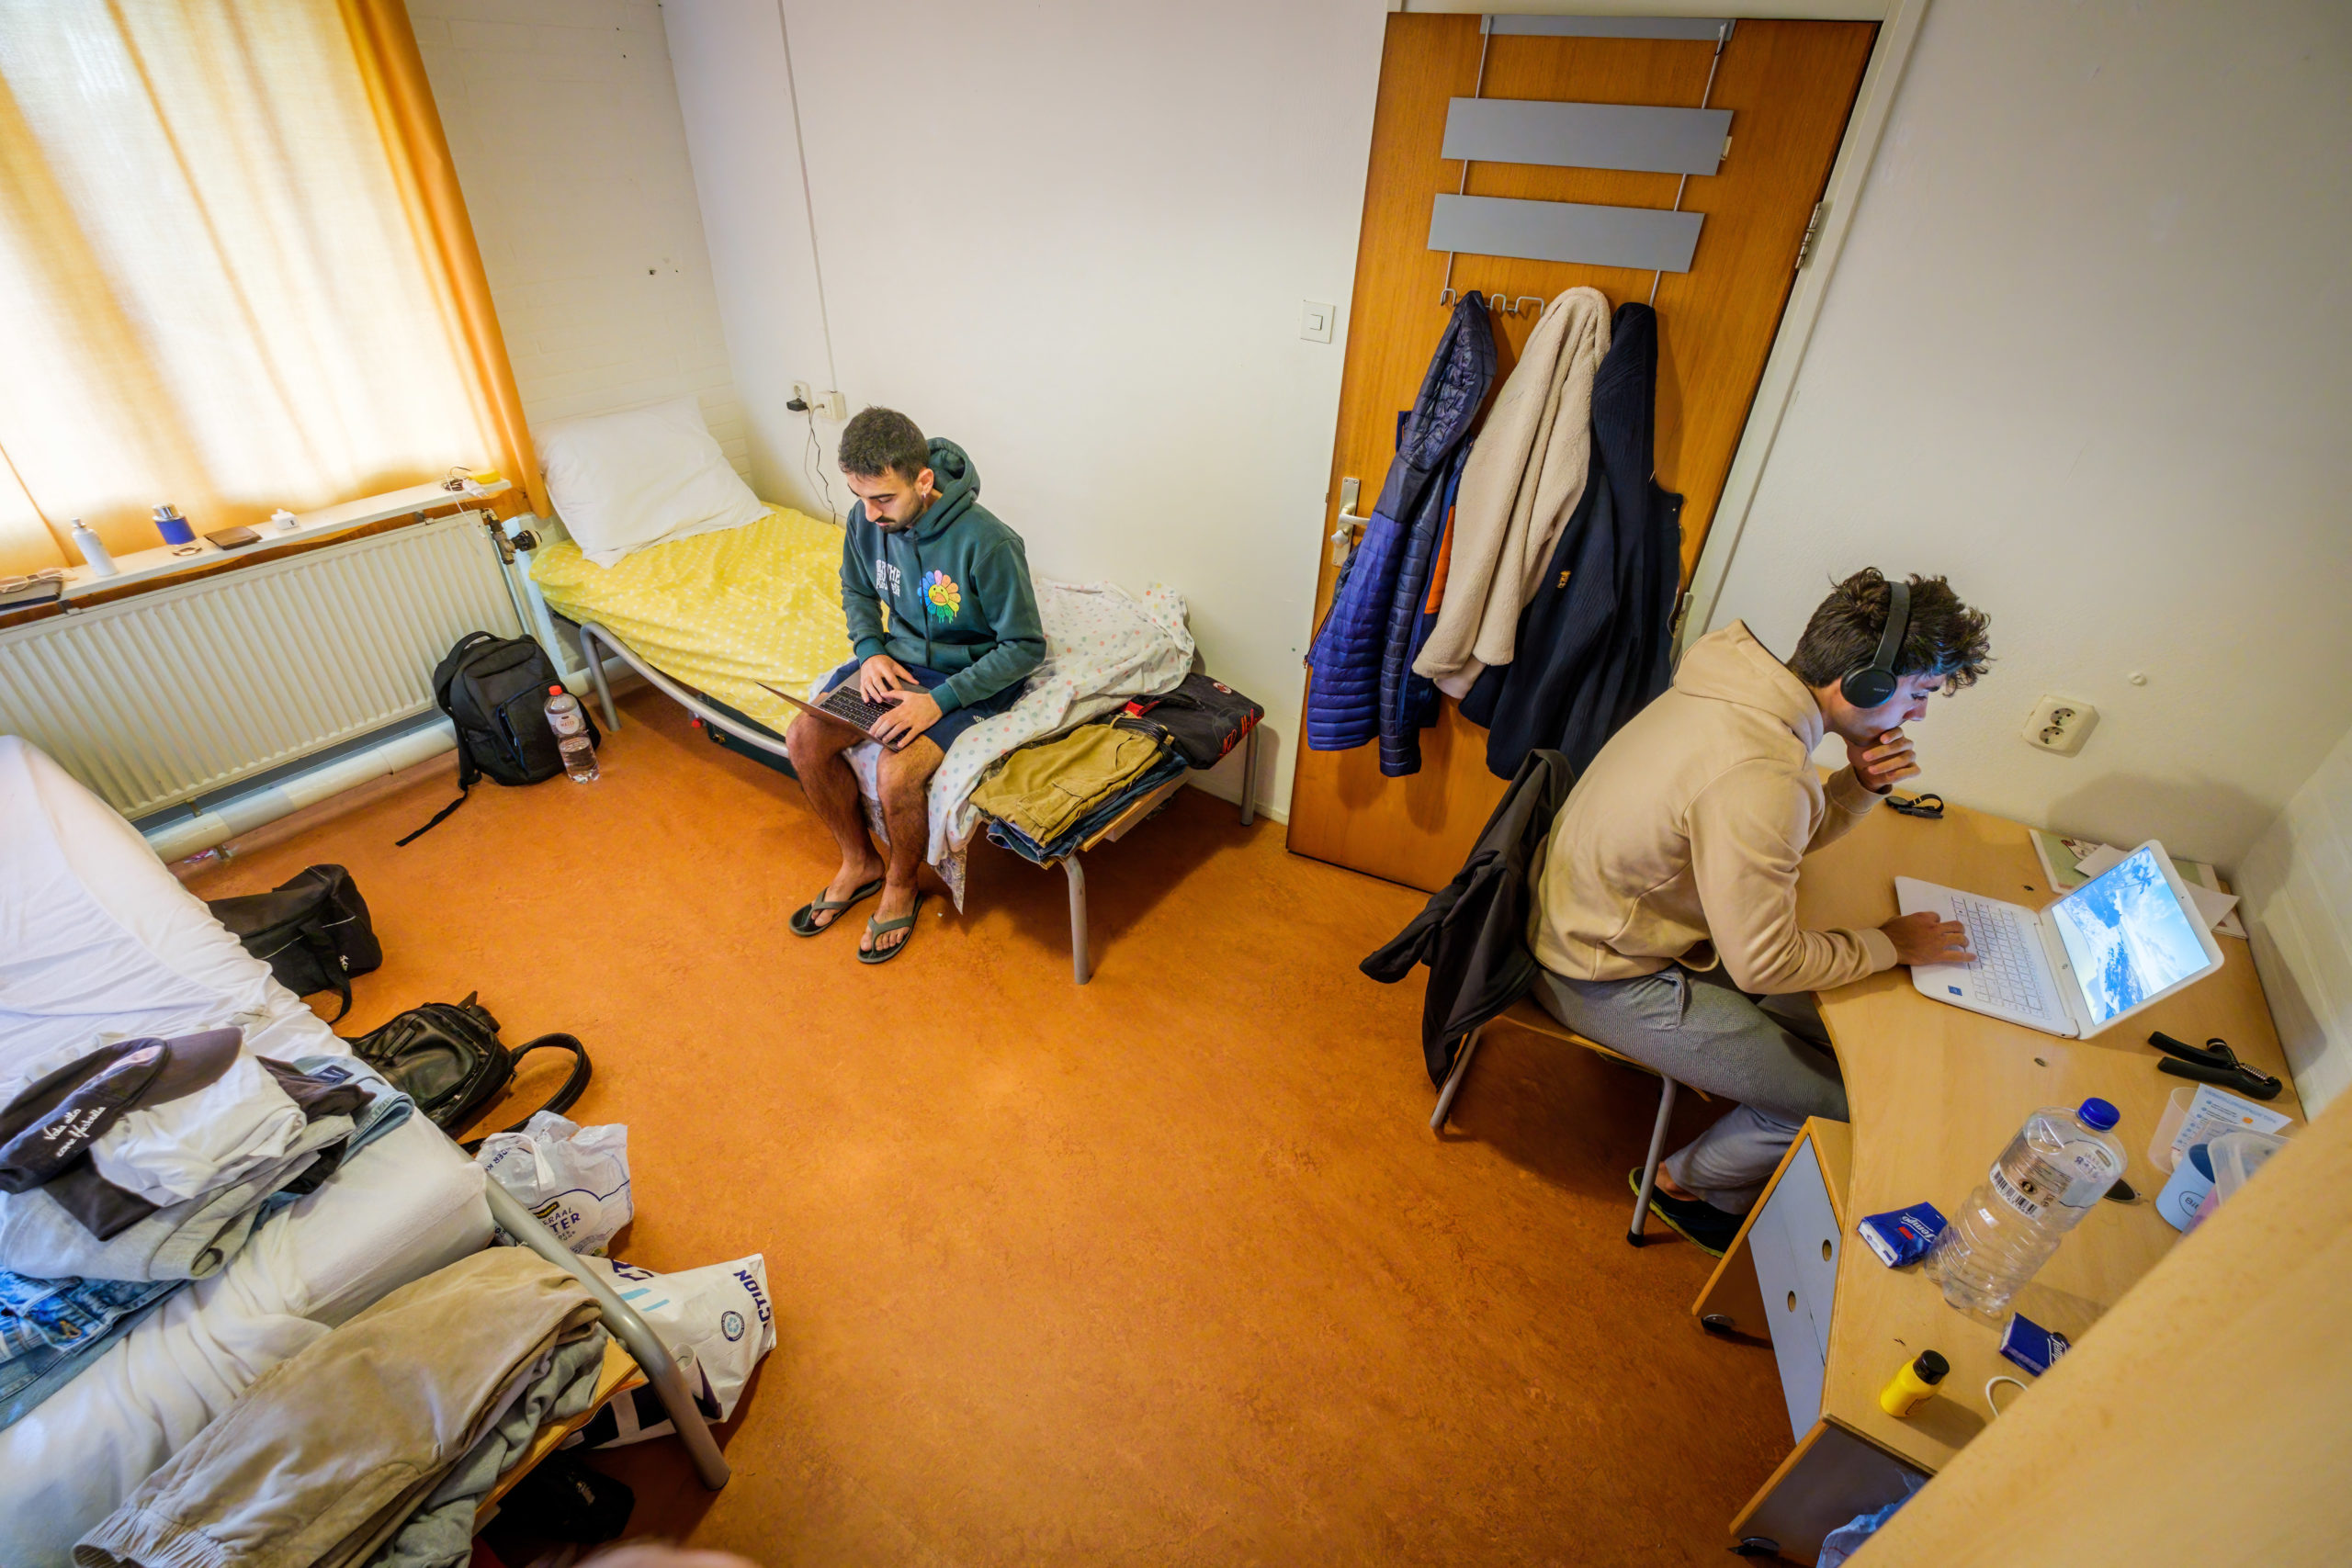 Kamernoodoplossing: twee studenten in een kamer